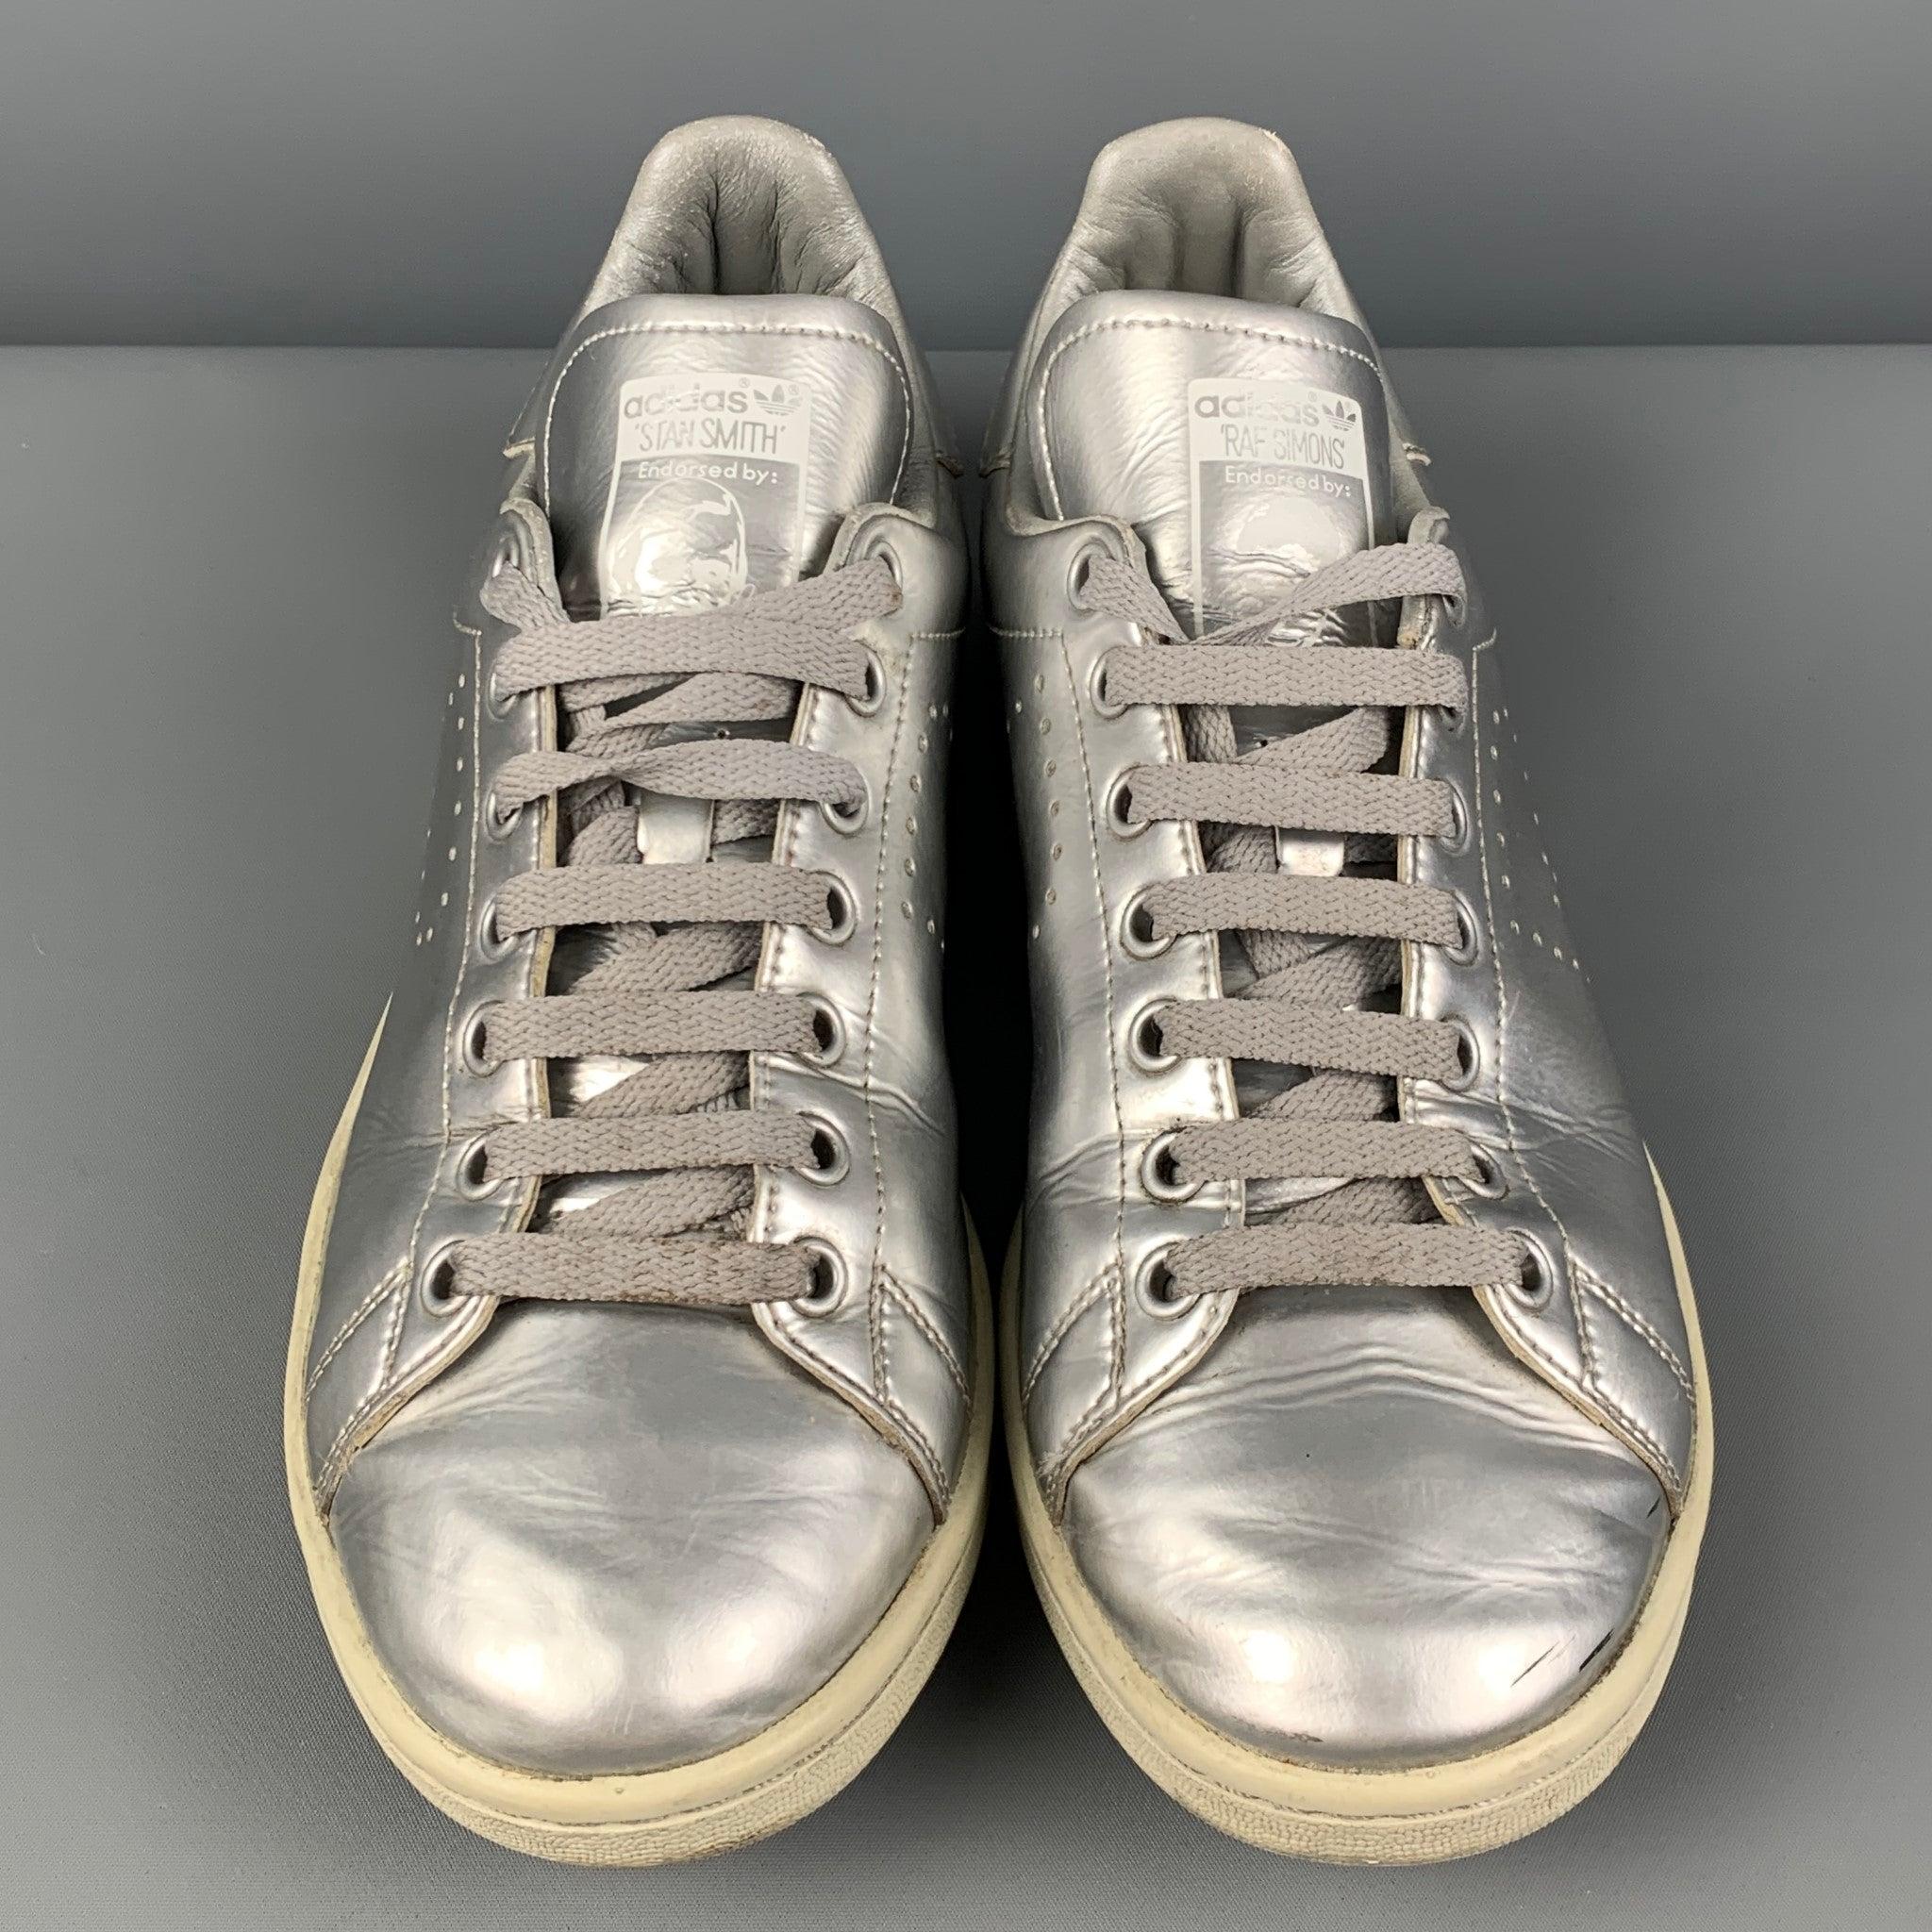 Men's ADIDAS x RAF SIMONS Size 8.5 Silver Metallic Leather Low Top Sneakers